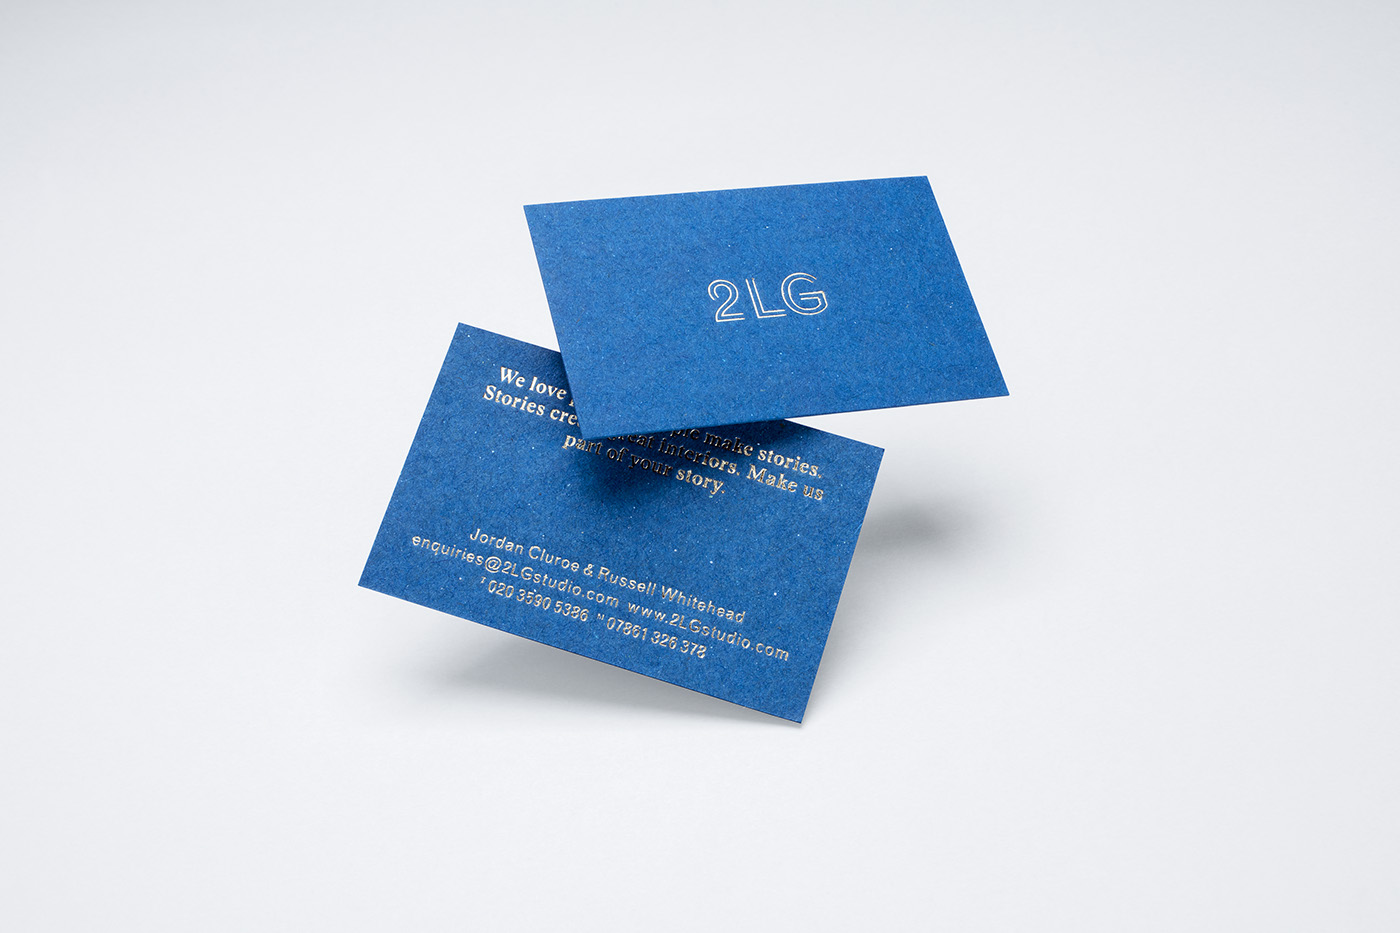 Gold block foiled business cards design by Two Times Elliott for London-based interior design studio 2LG